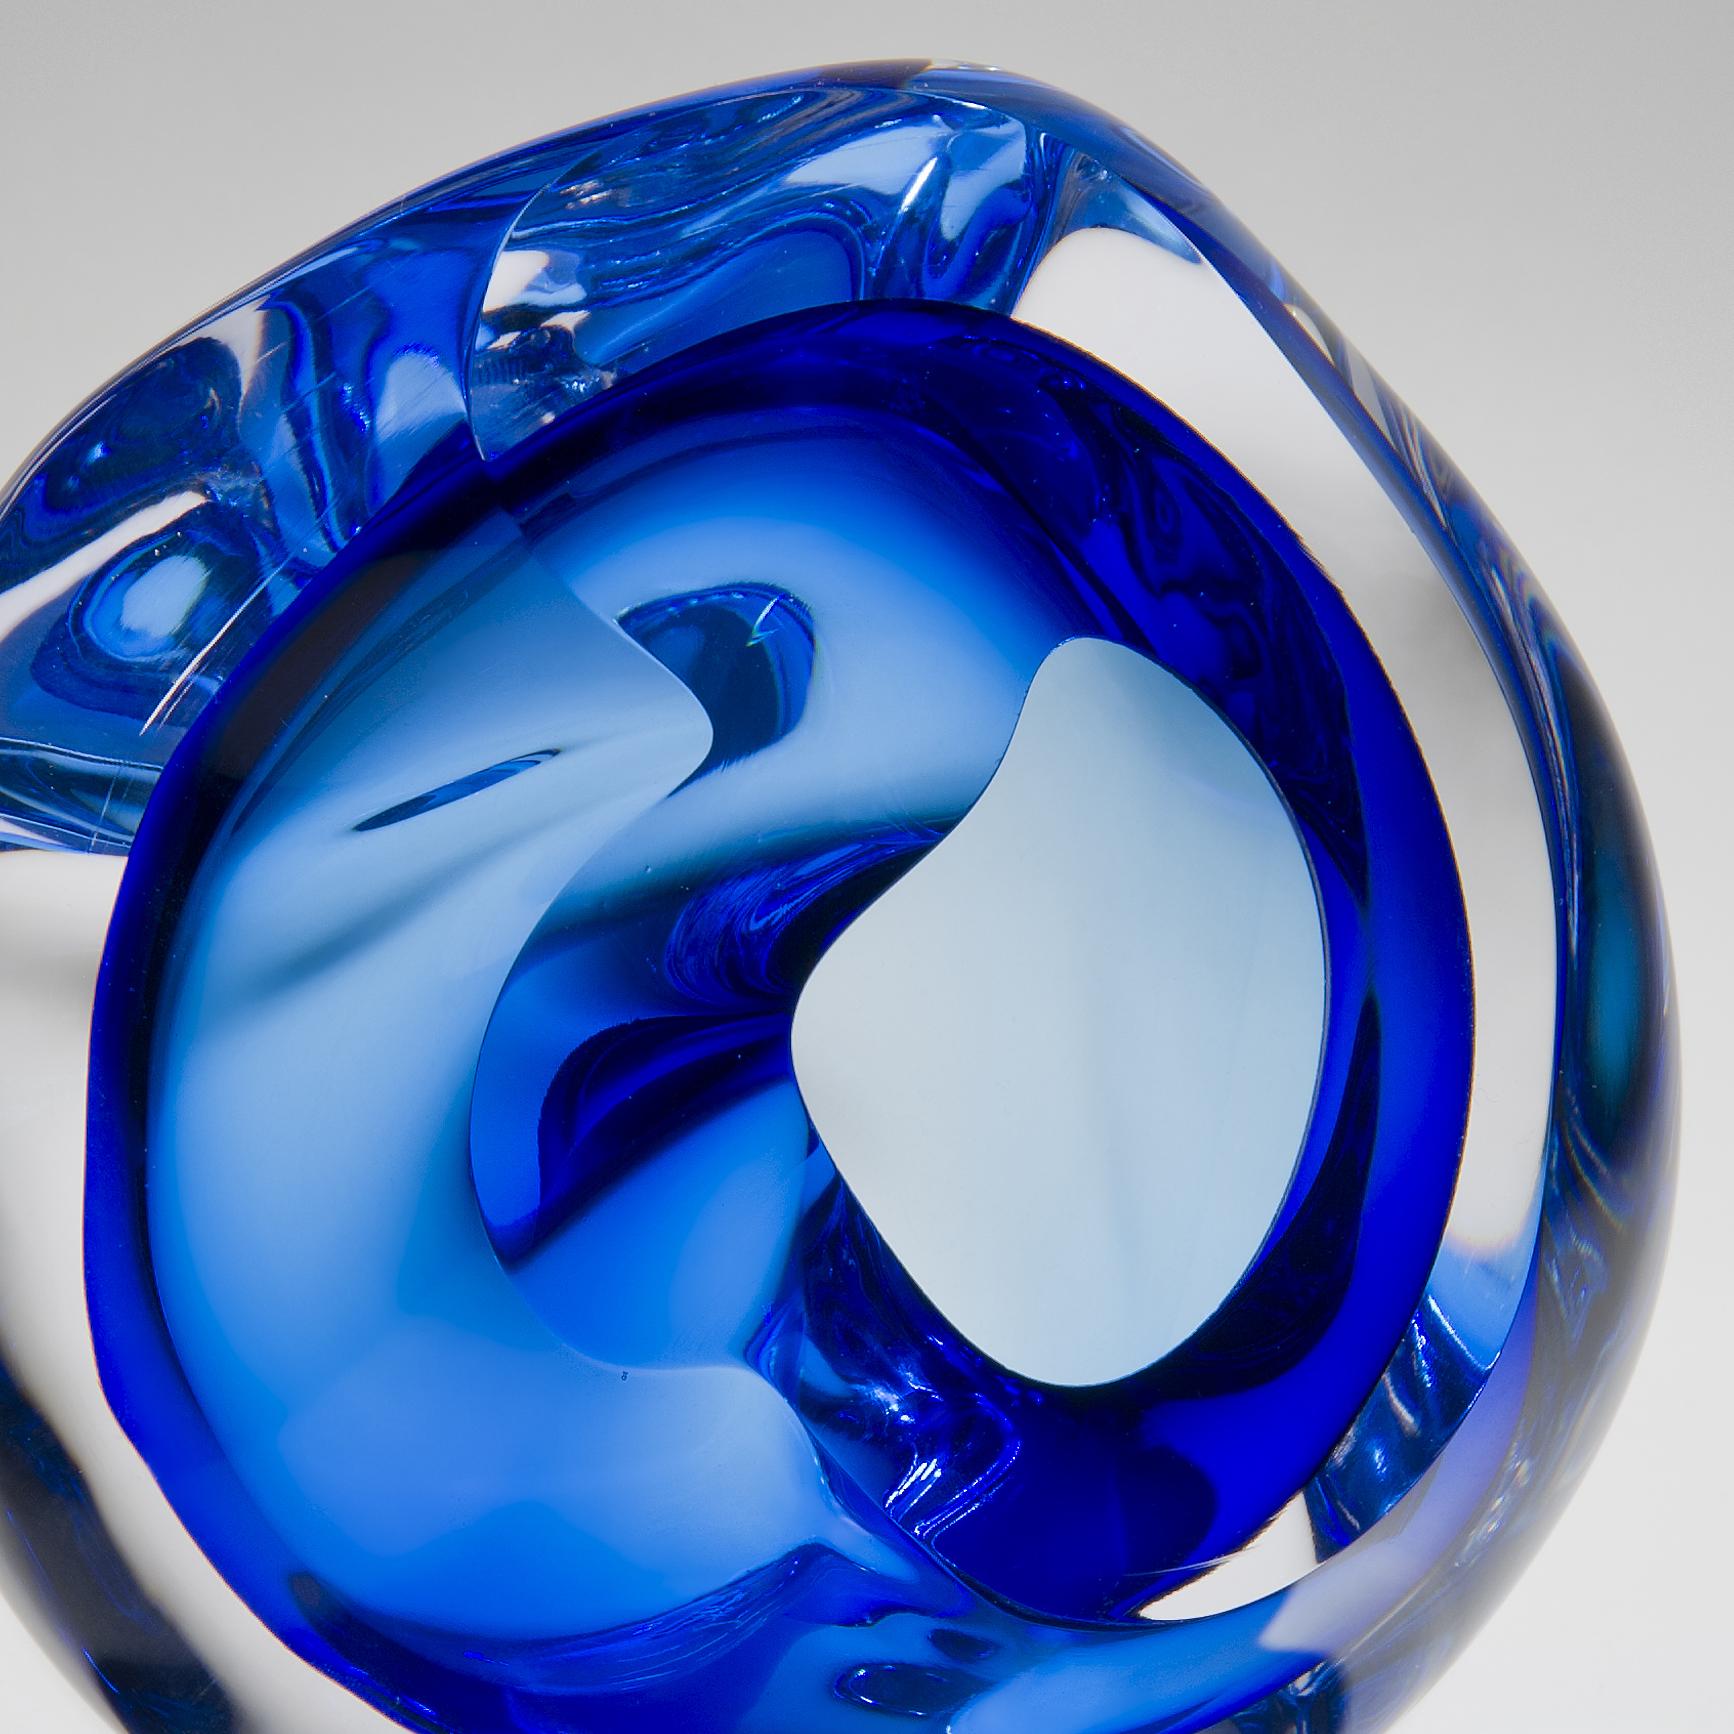 Organic Modern Vug in Blue, a Unique Glass Sculpture by Samantha Donaldson